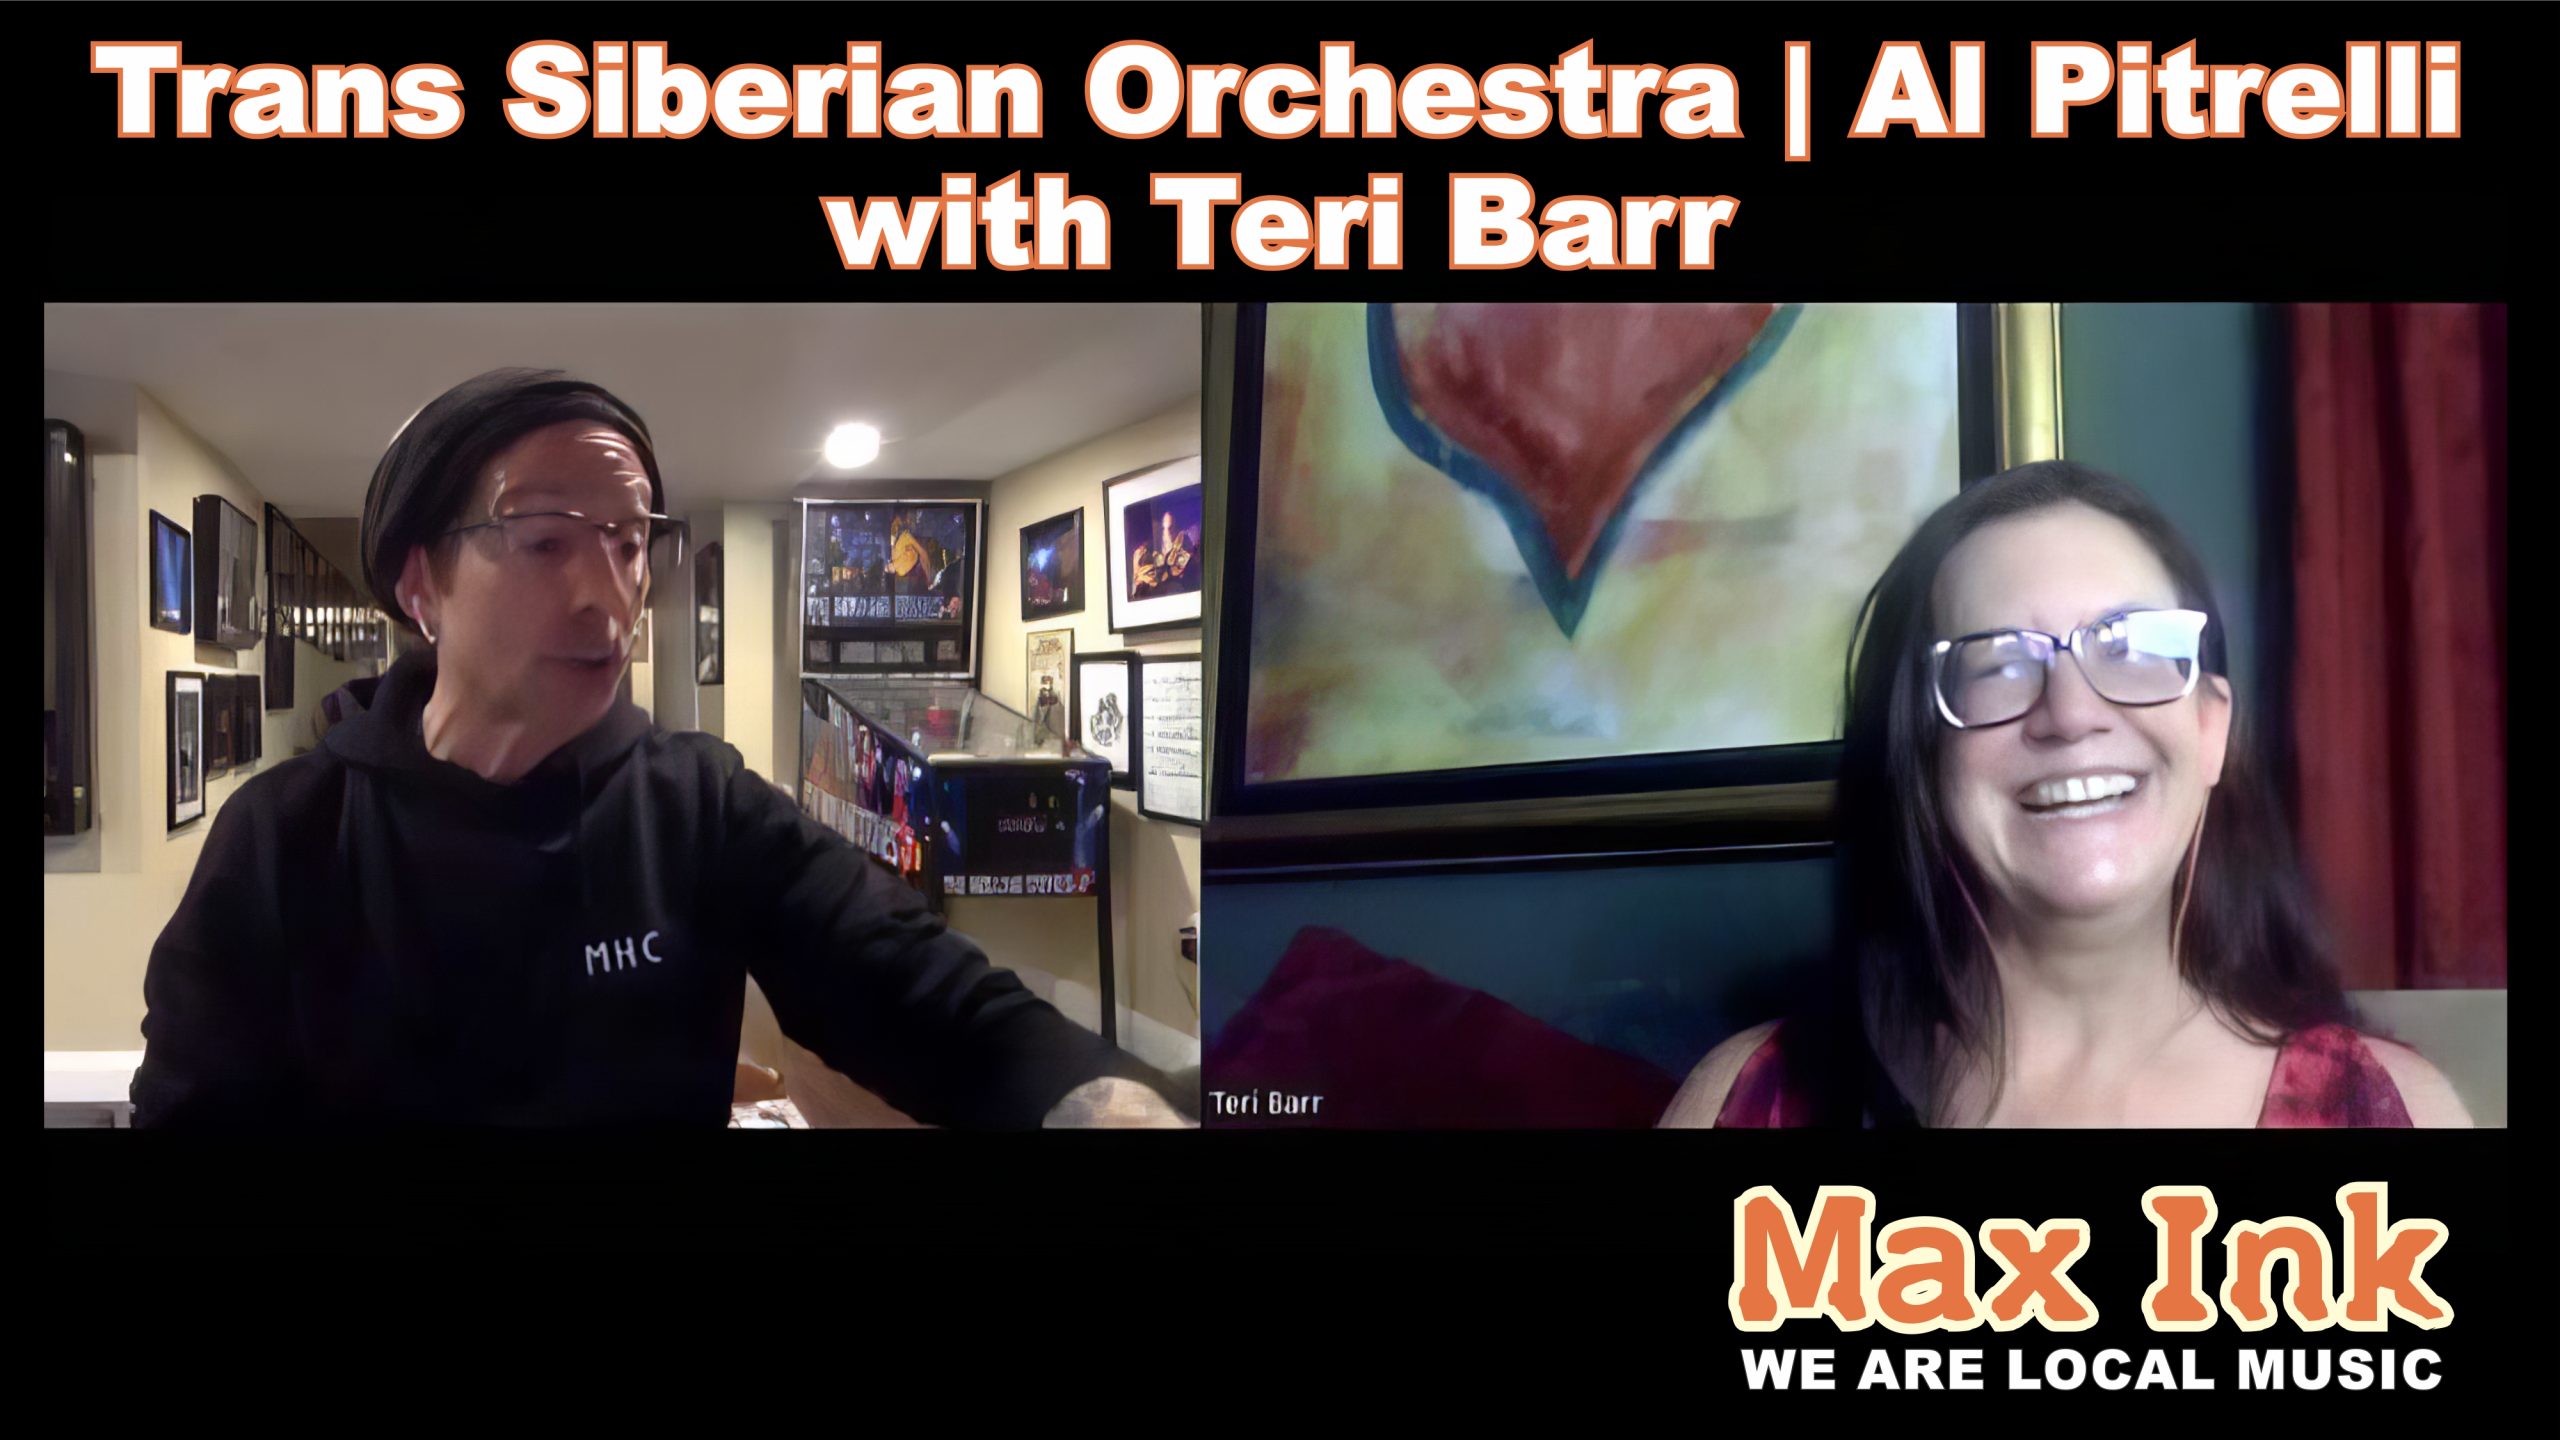 Trans Siberian Orchestra musical director Al Pitrelli with Teri Barr